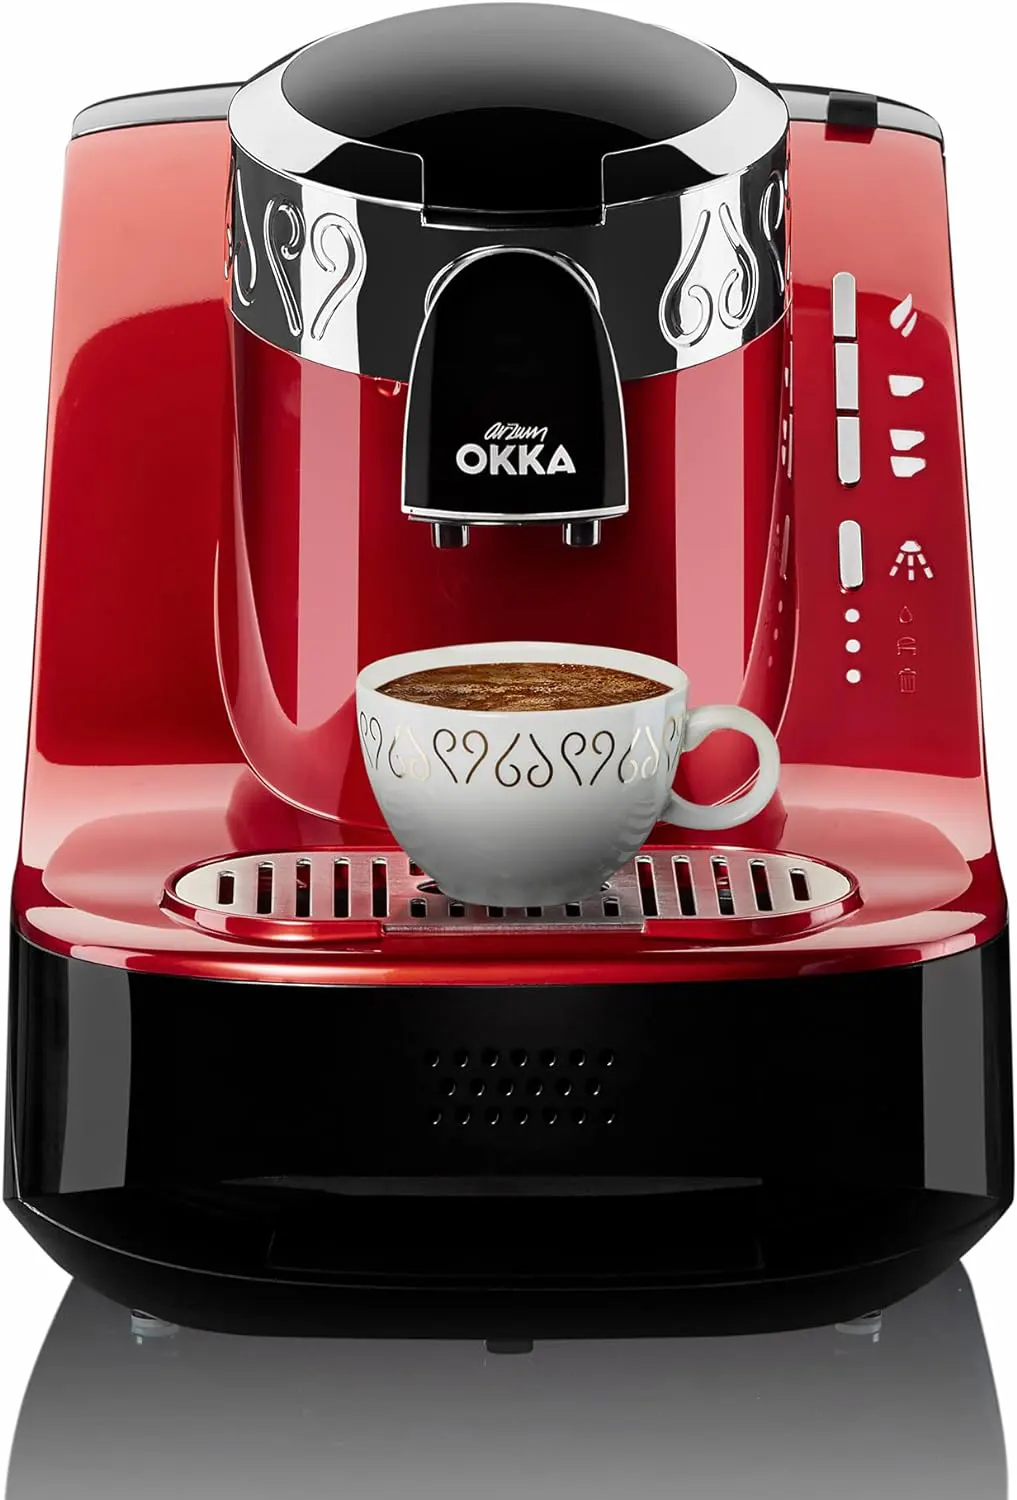 Arzum Okka Turkish Coffee Maker, 710 Watt, Red, OK002-N